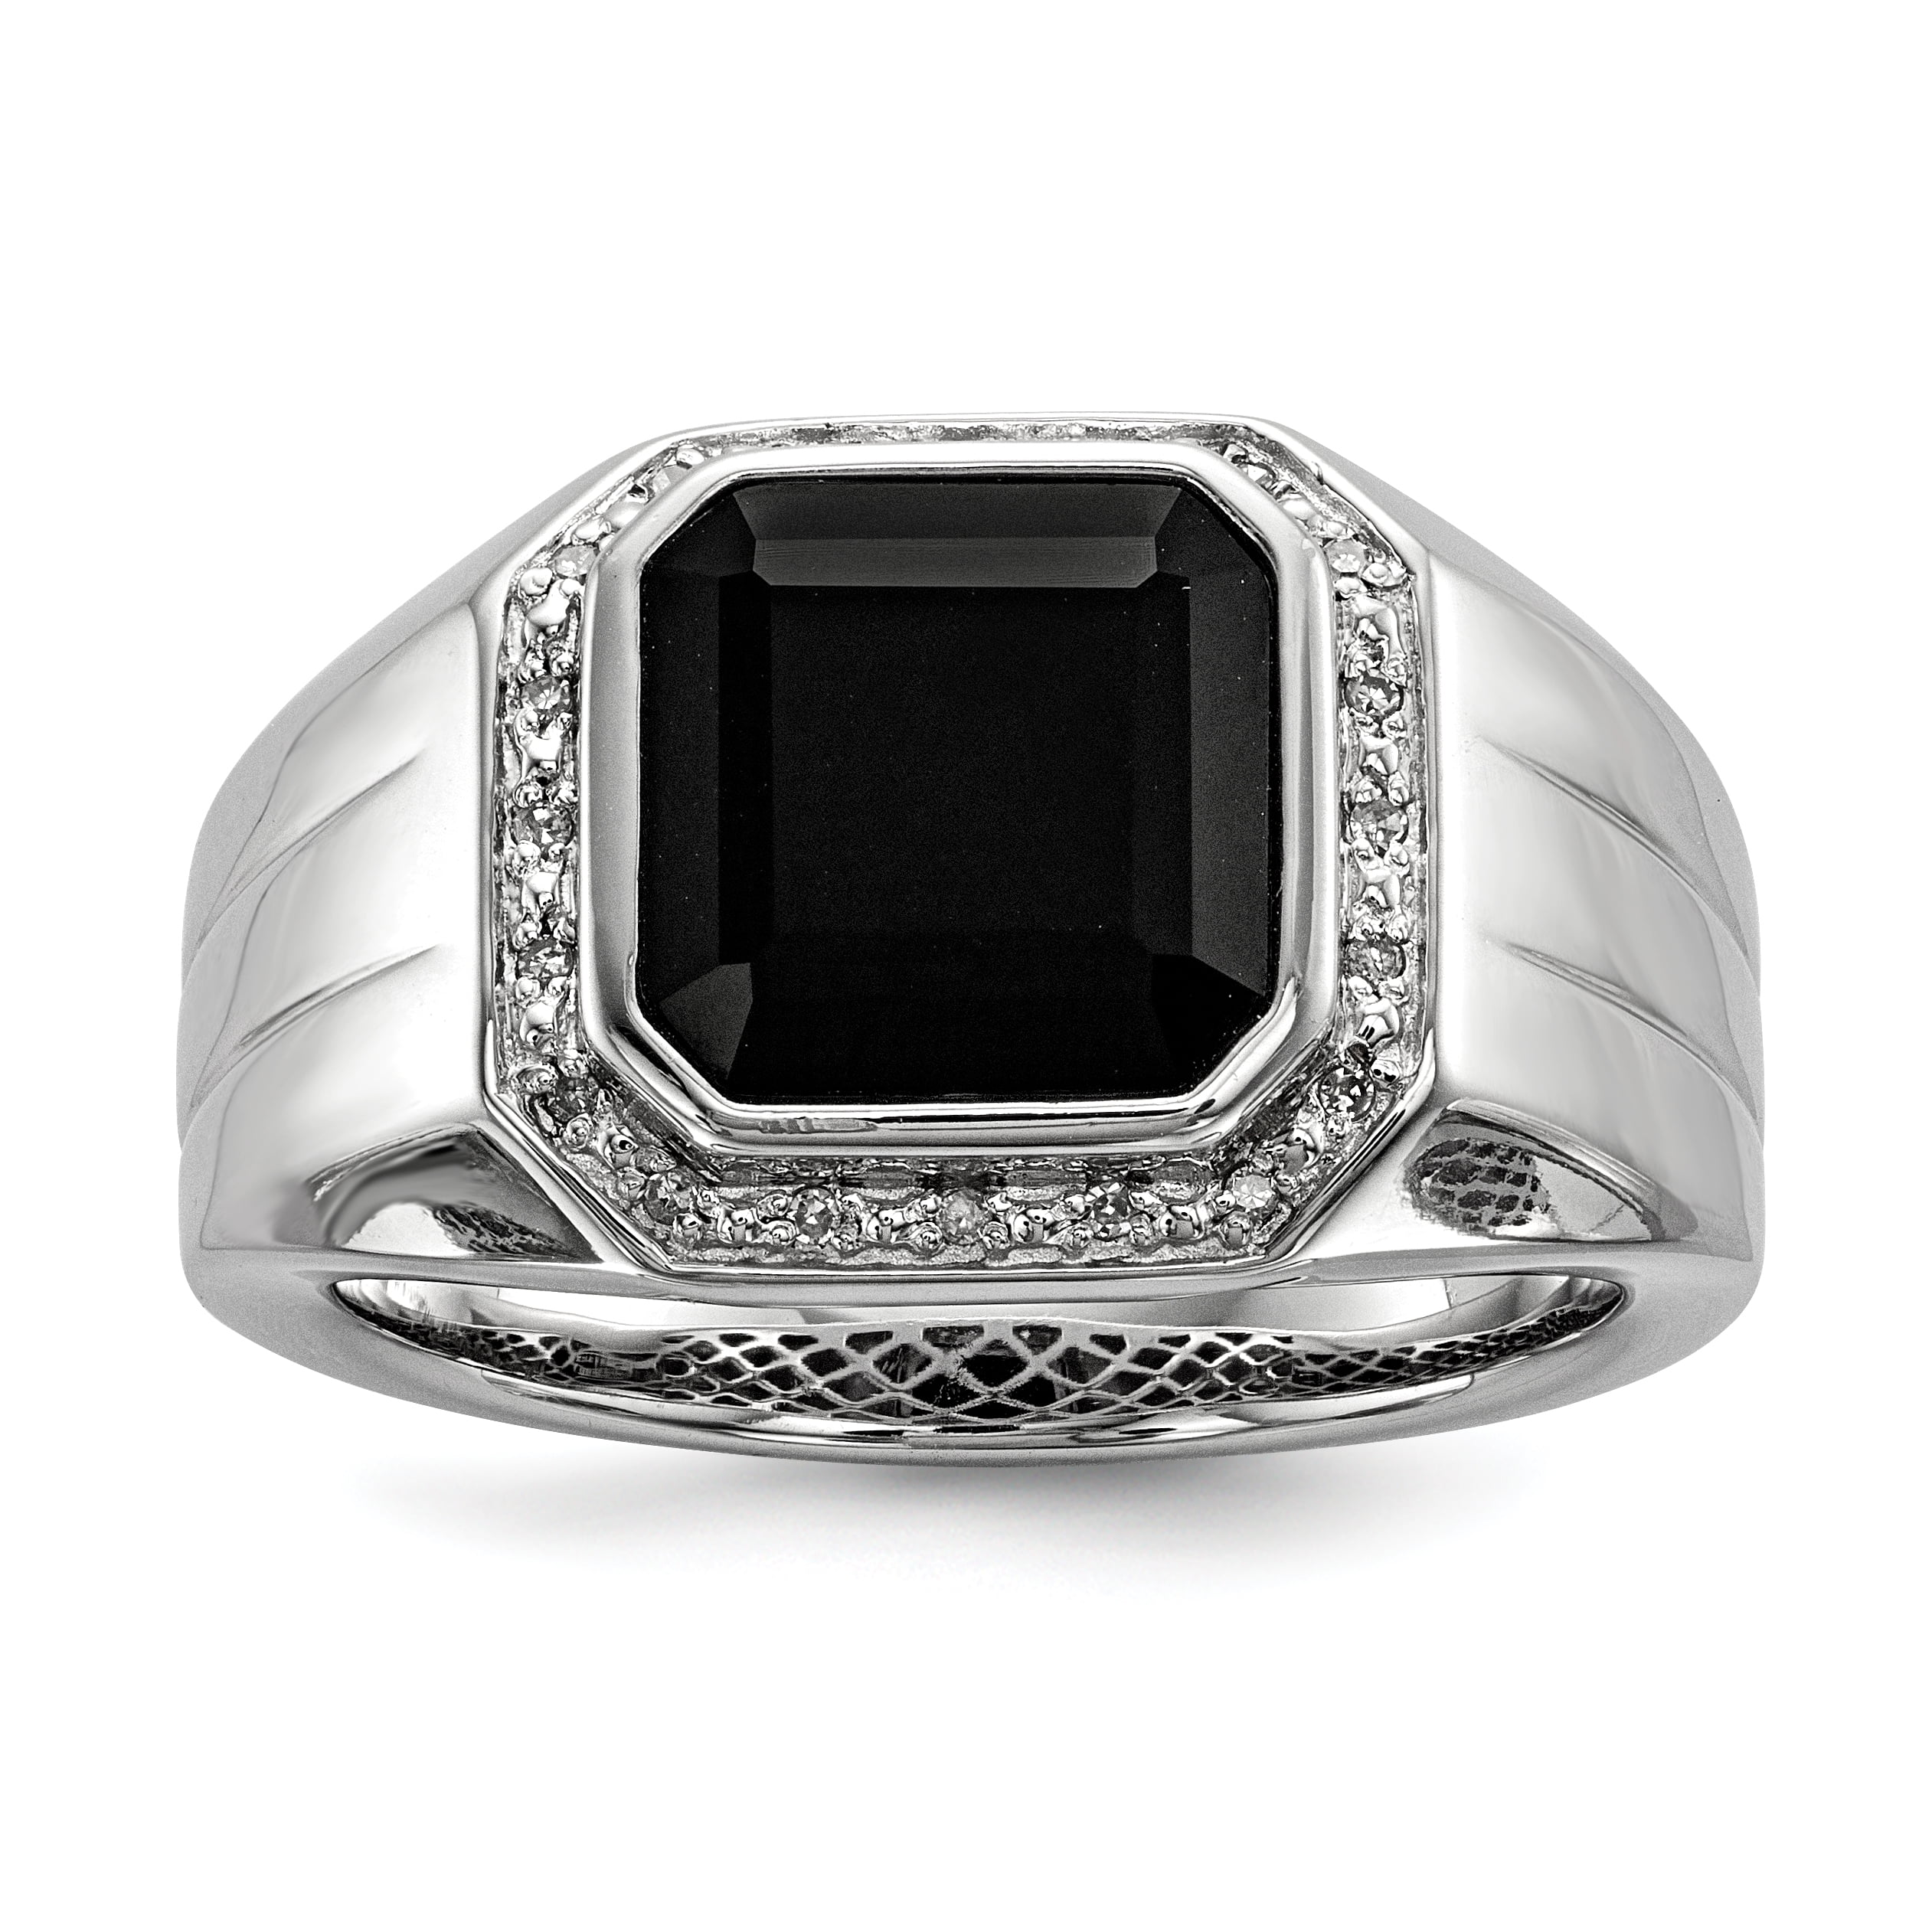 925 Sterling Silver Polished Black Onyx & CZ Men's Ring Size 10